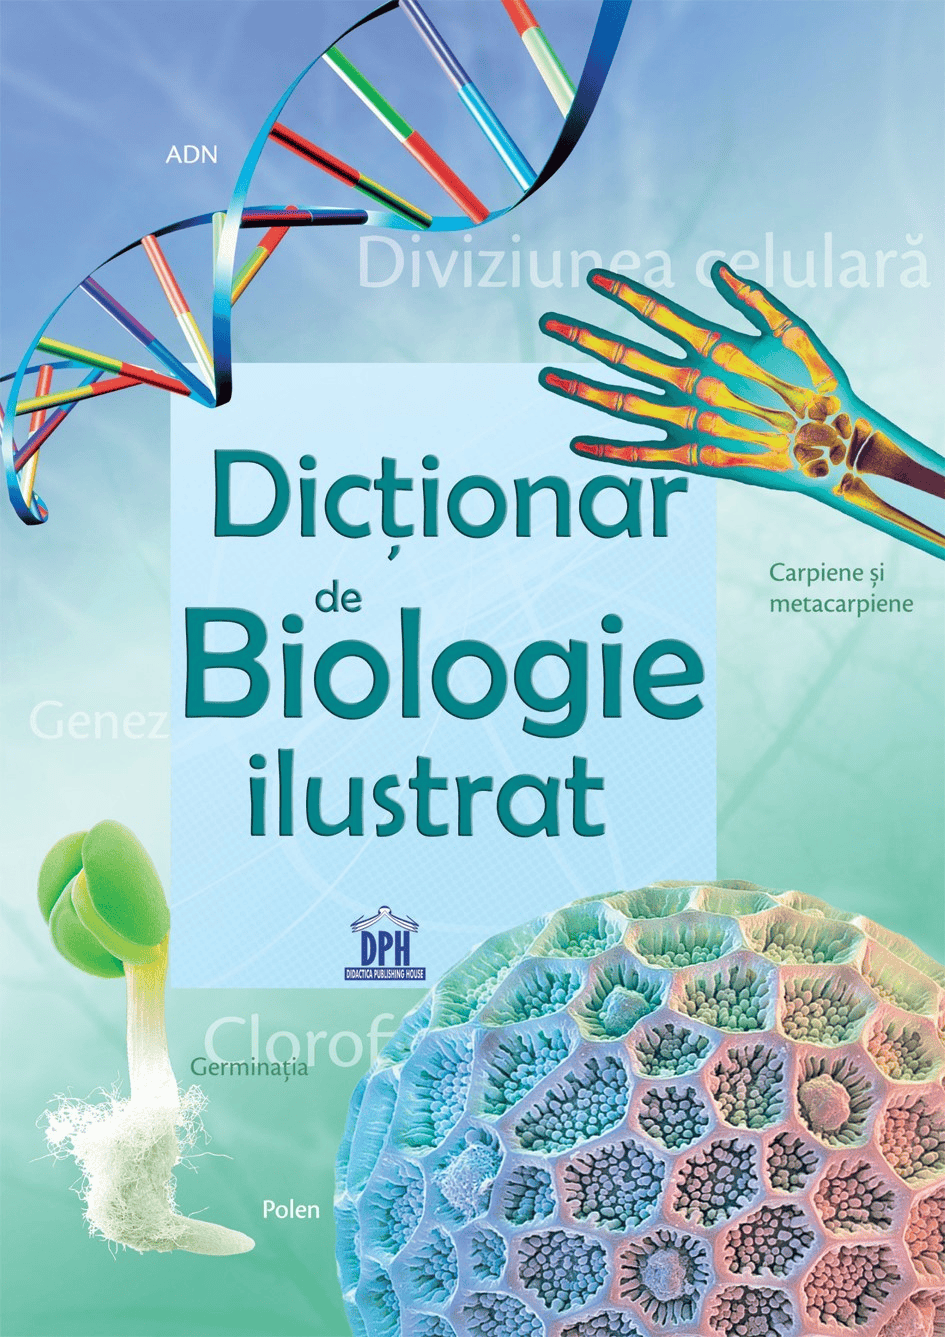 Dictionar de biologie ilustrat, DPH, 12 ani +